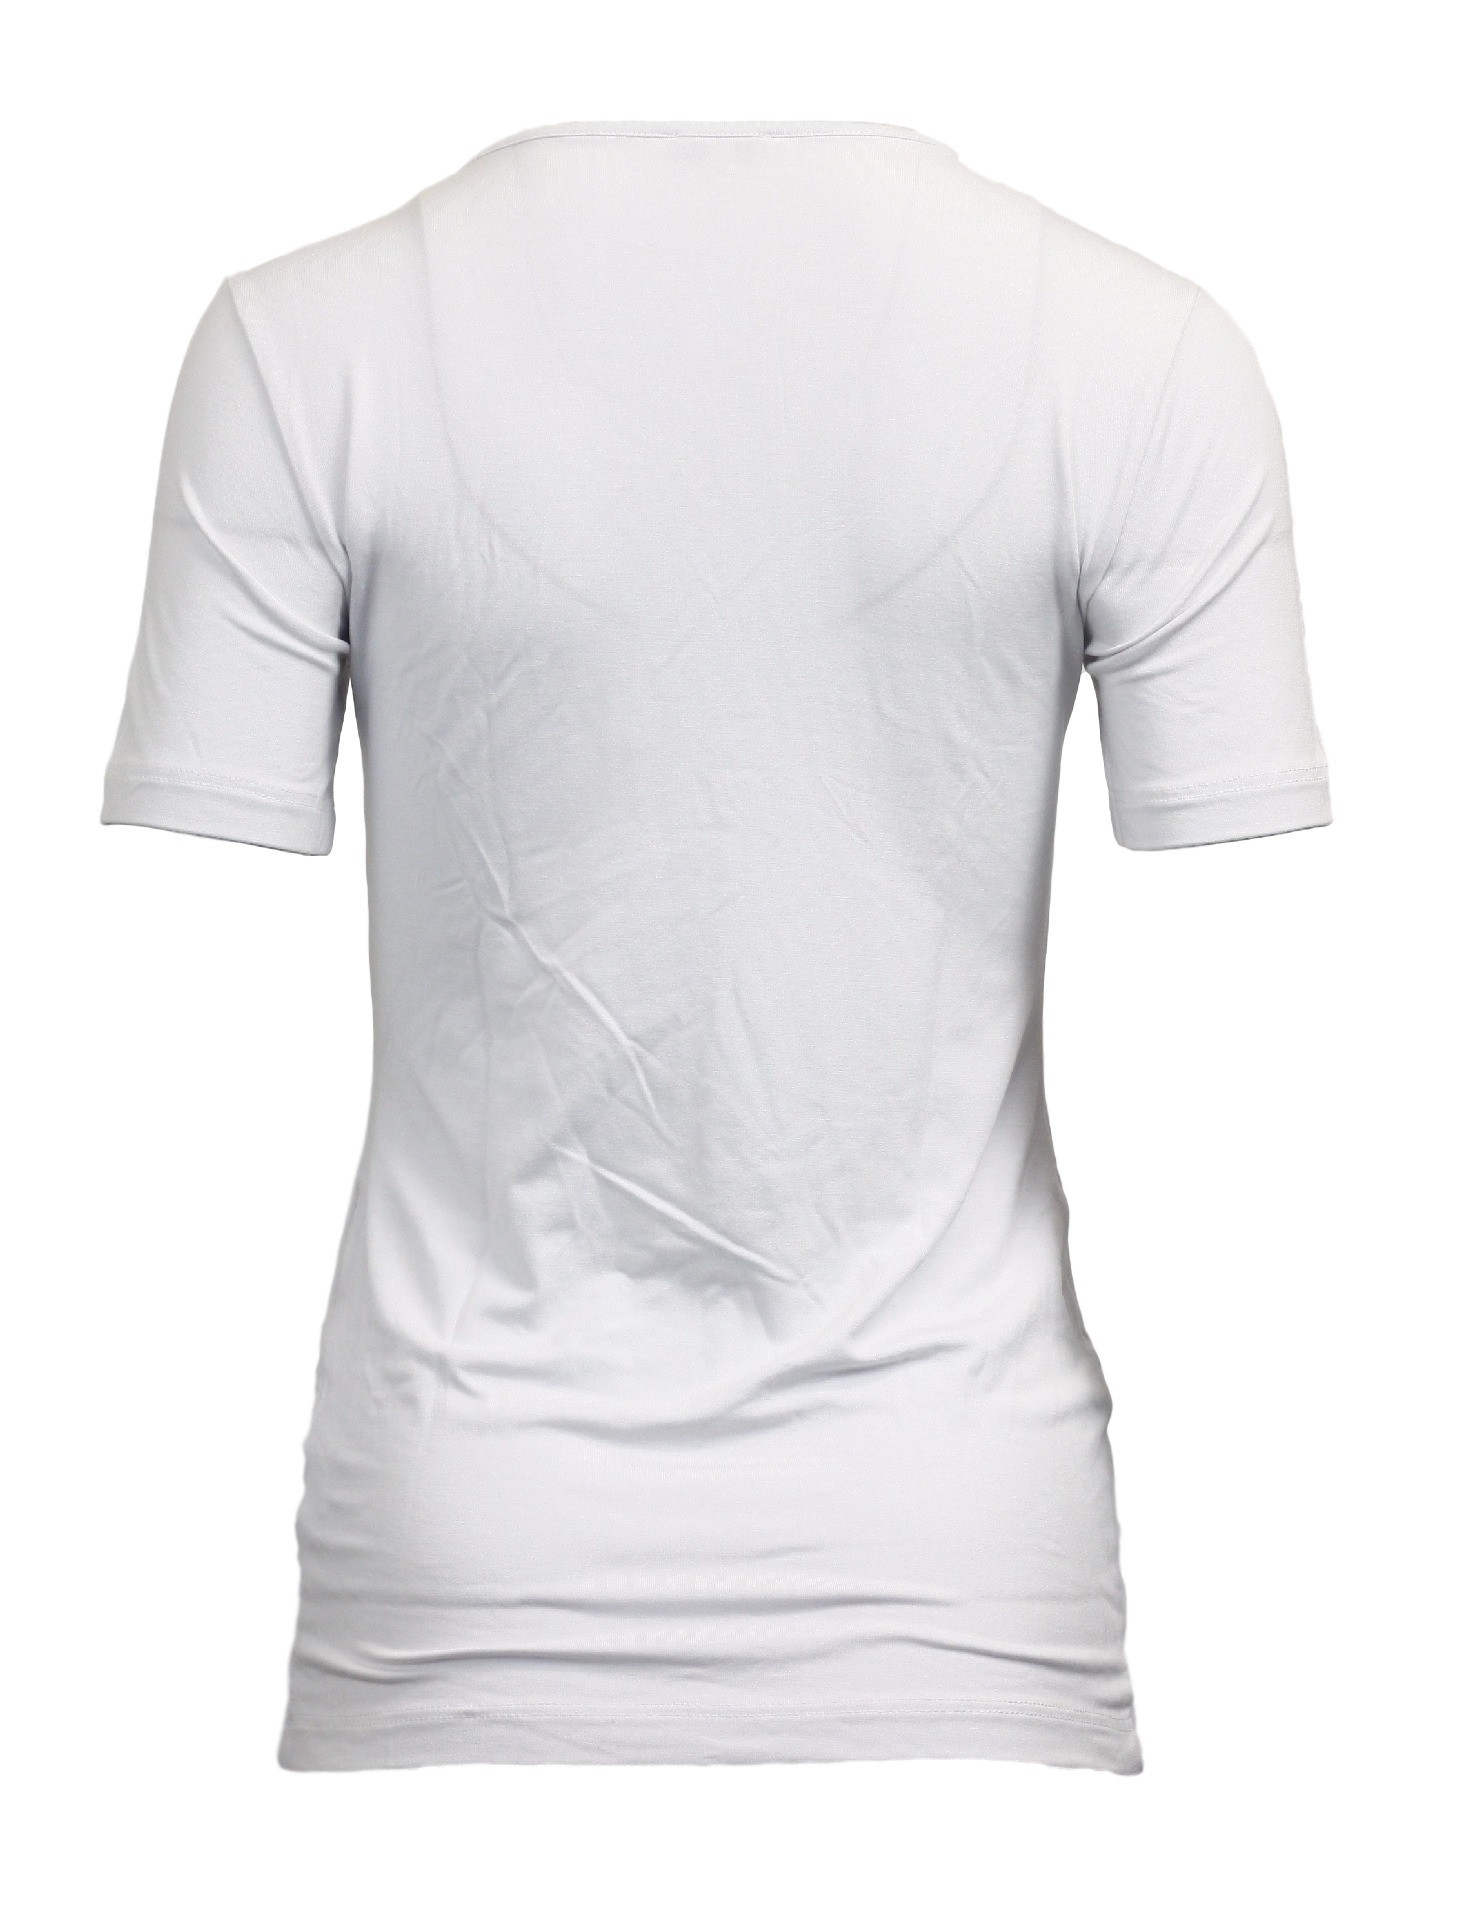 Dámské tričko bílá L model 14725413 - Favab